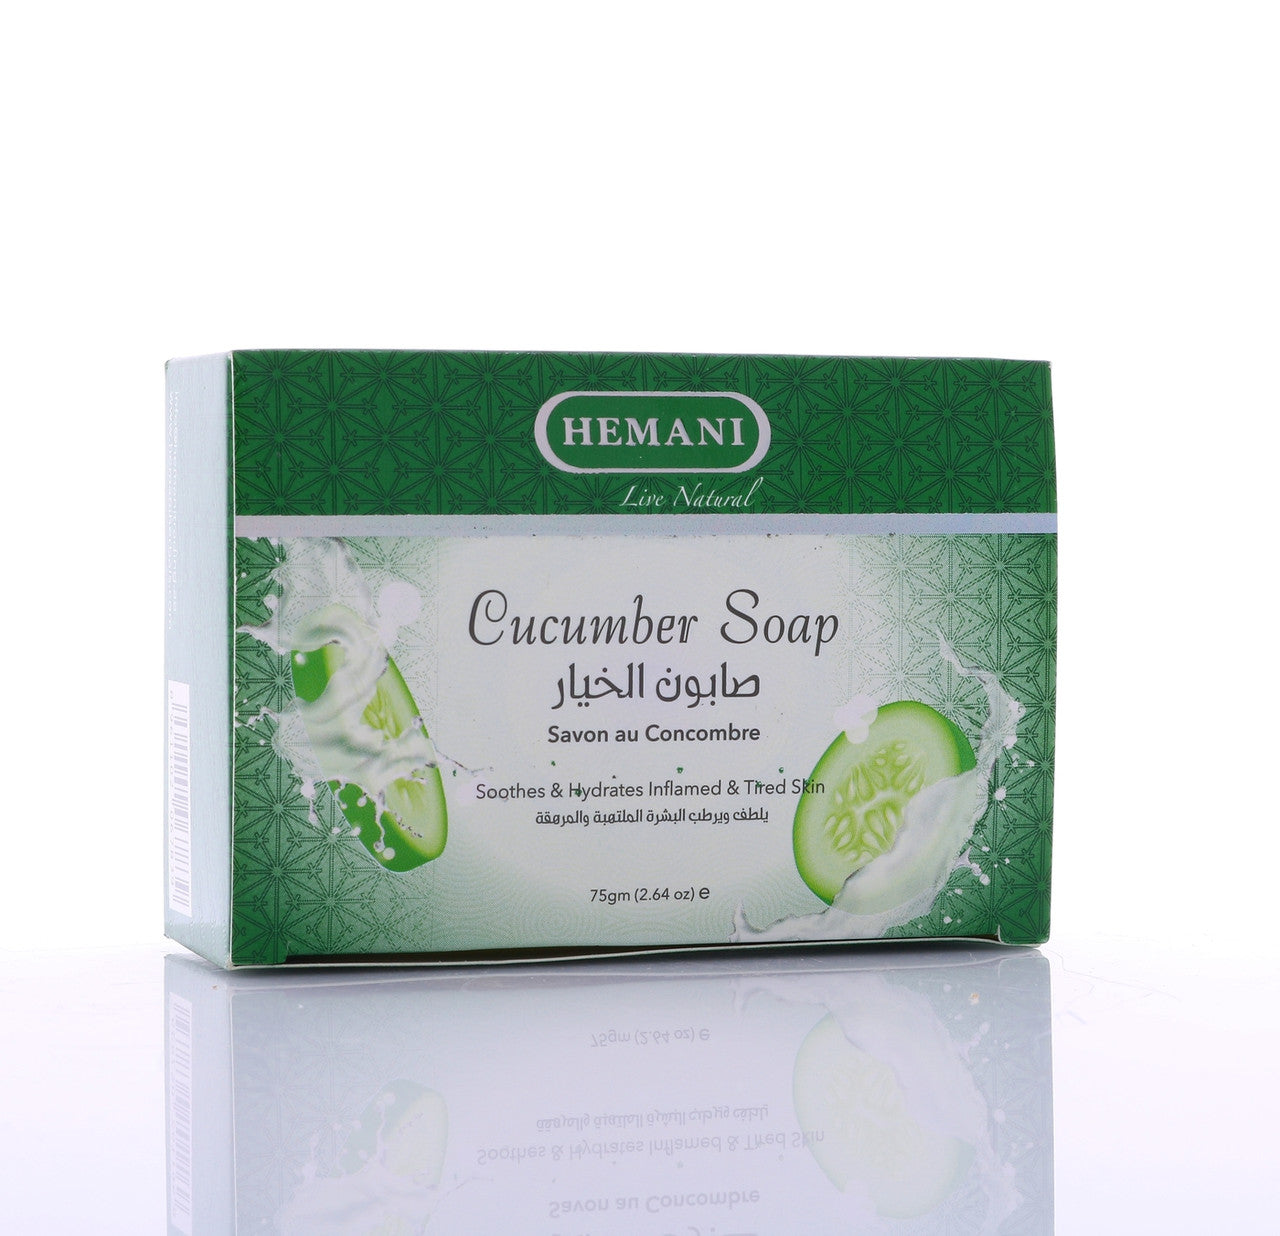 HEMANI Cucumber Soap 75g